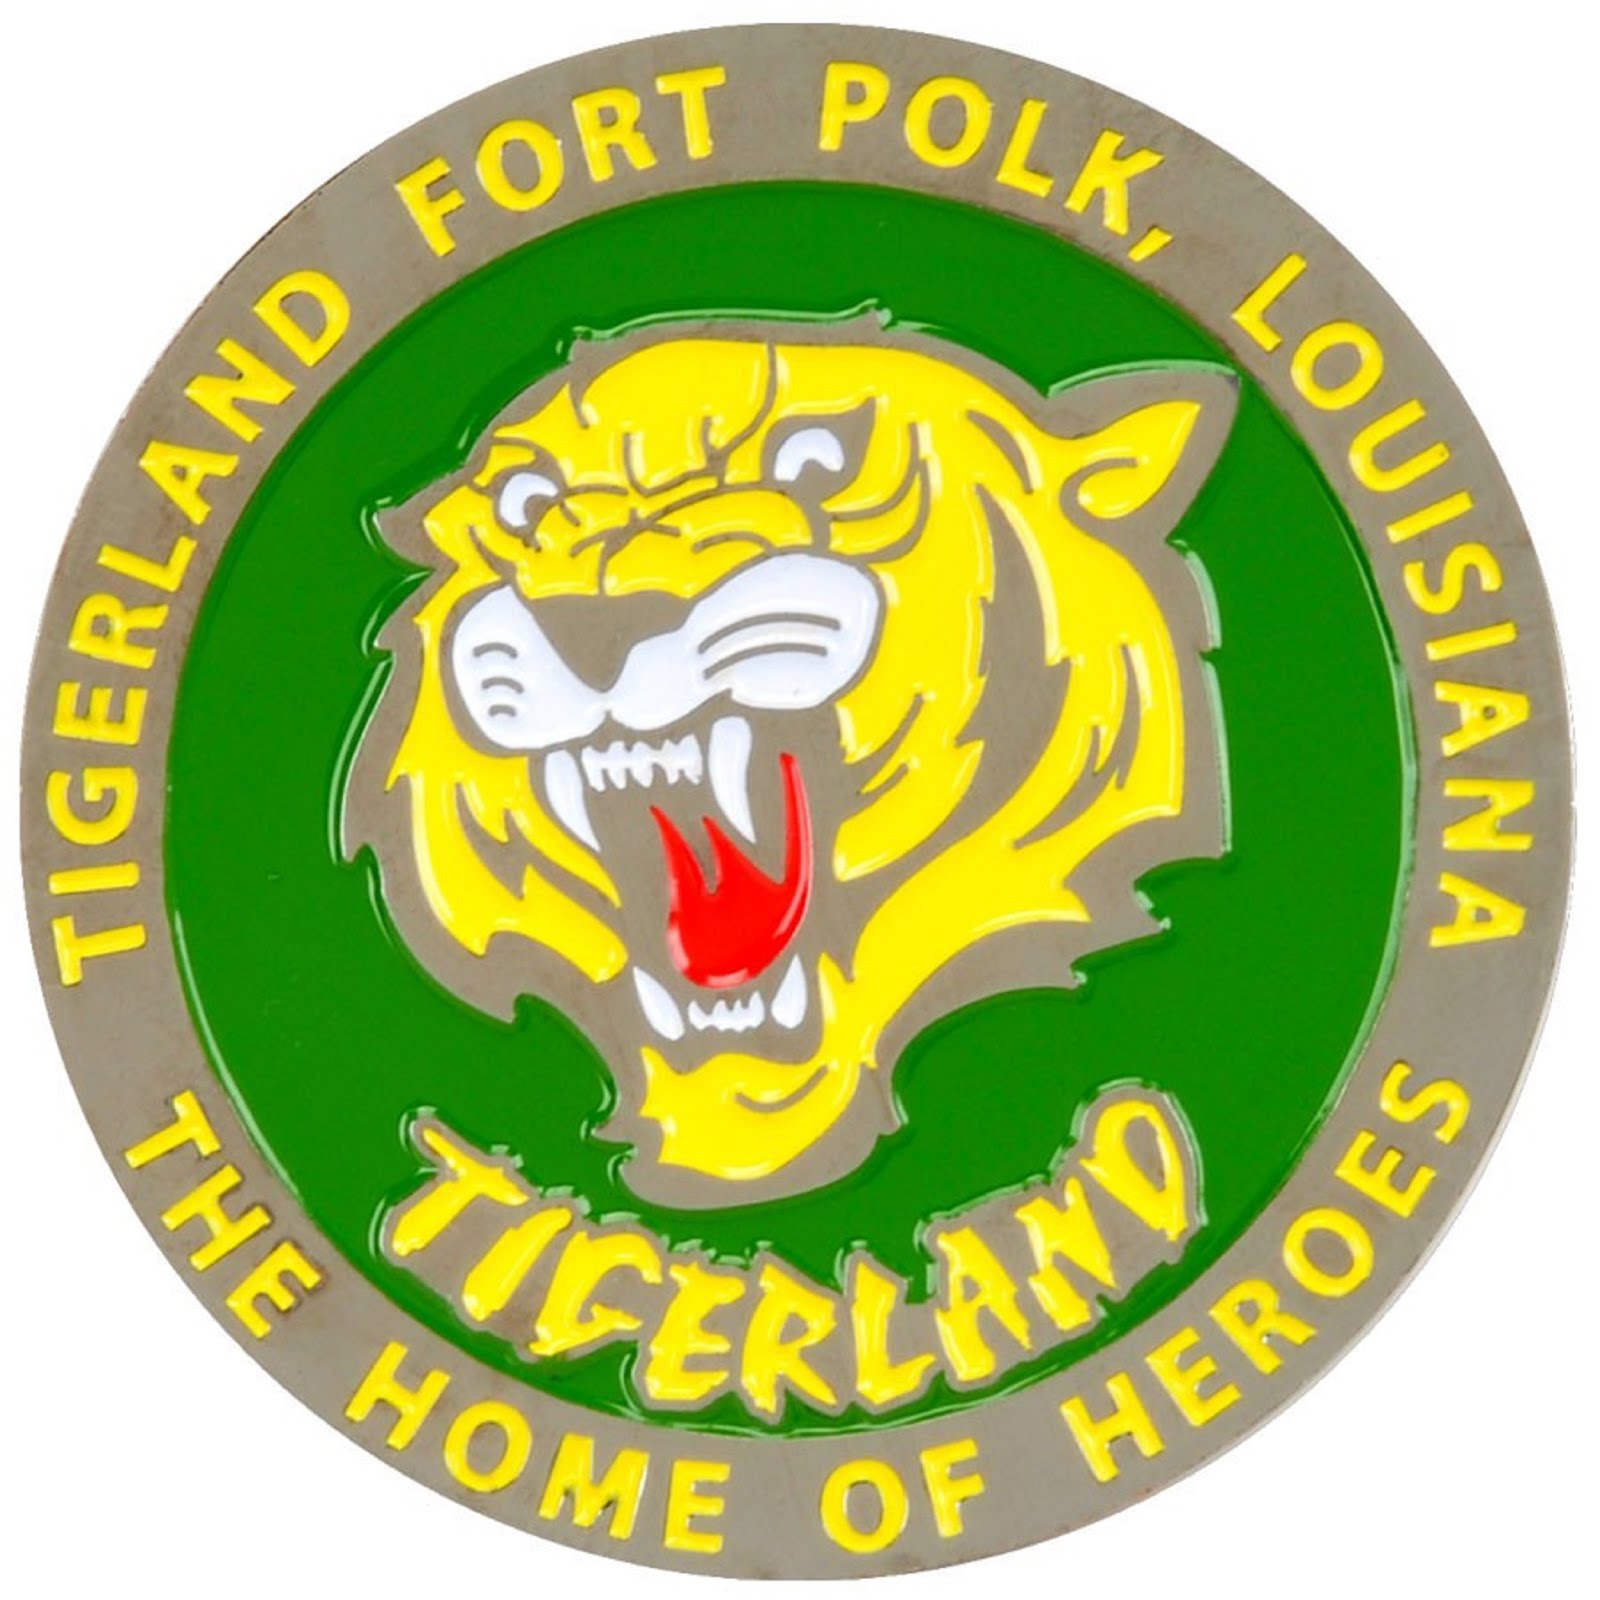 FORT POLK "TIGERLAND" LOUISIANA - THE HOME OF HEROES